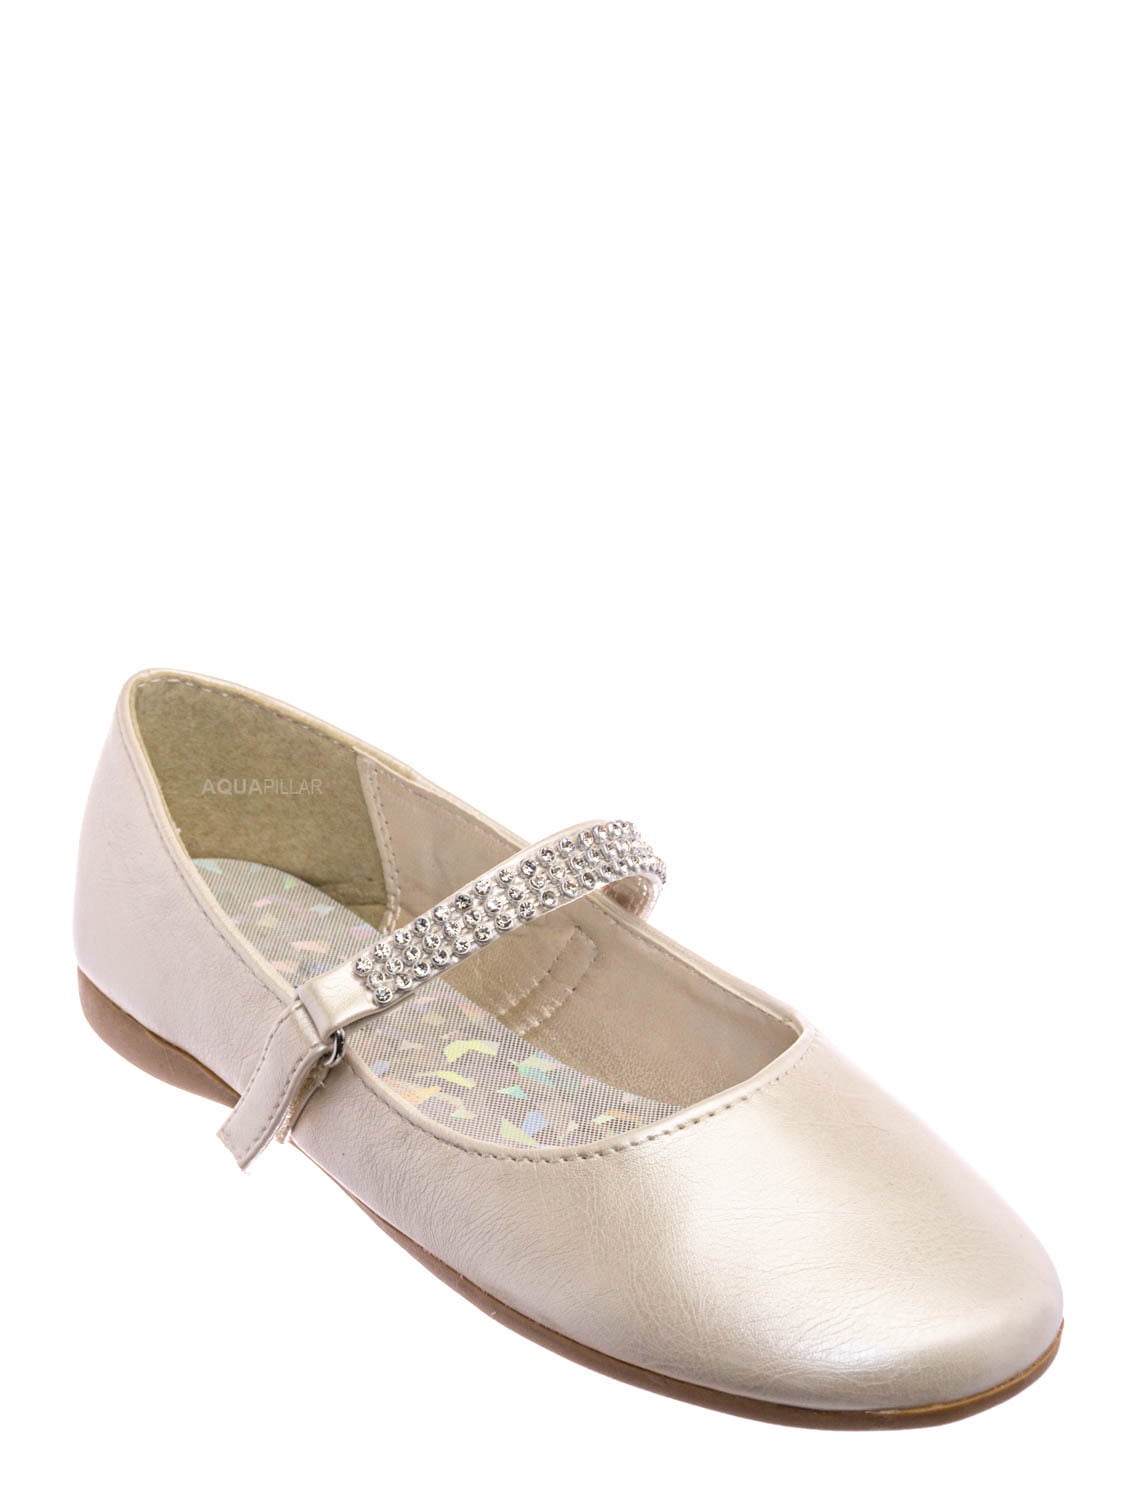 Girls Kids Glitter Ballet Flat Shoes Ballerina Strap Dress Rhinestone Mary Jane 